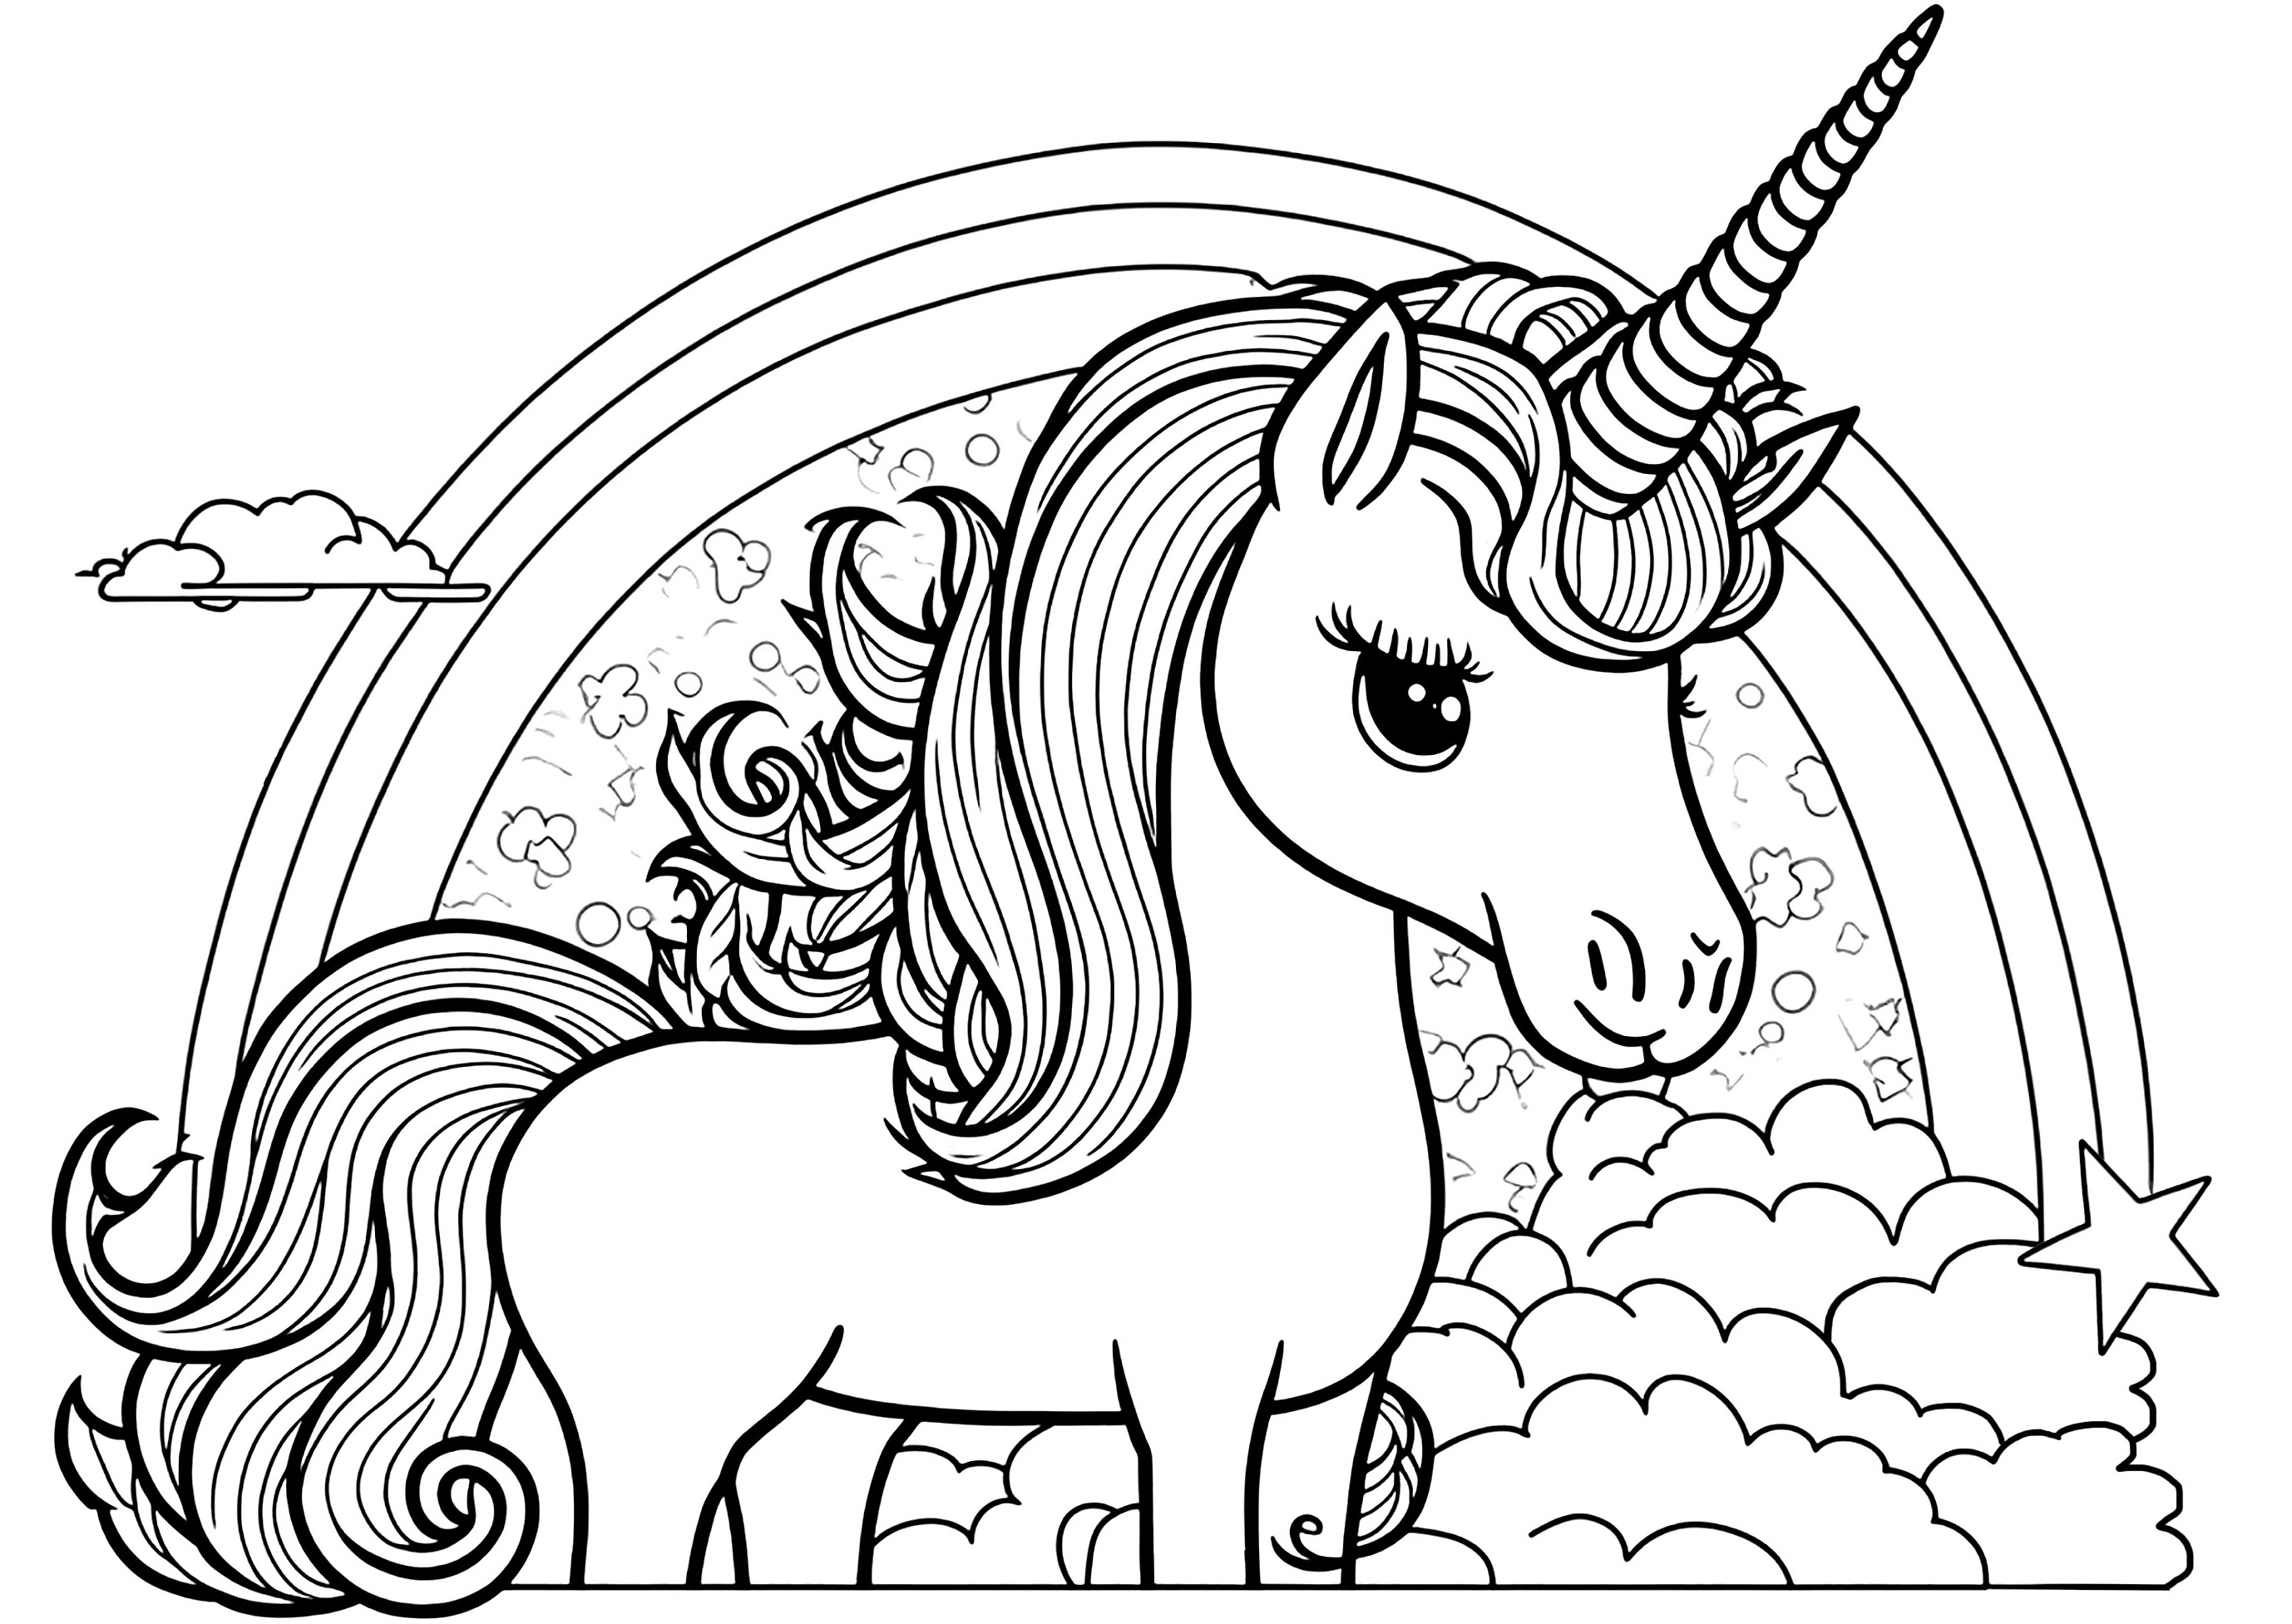 rainbow unicorn coloring page